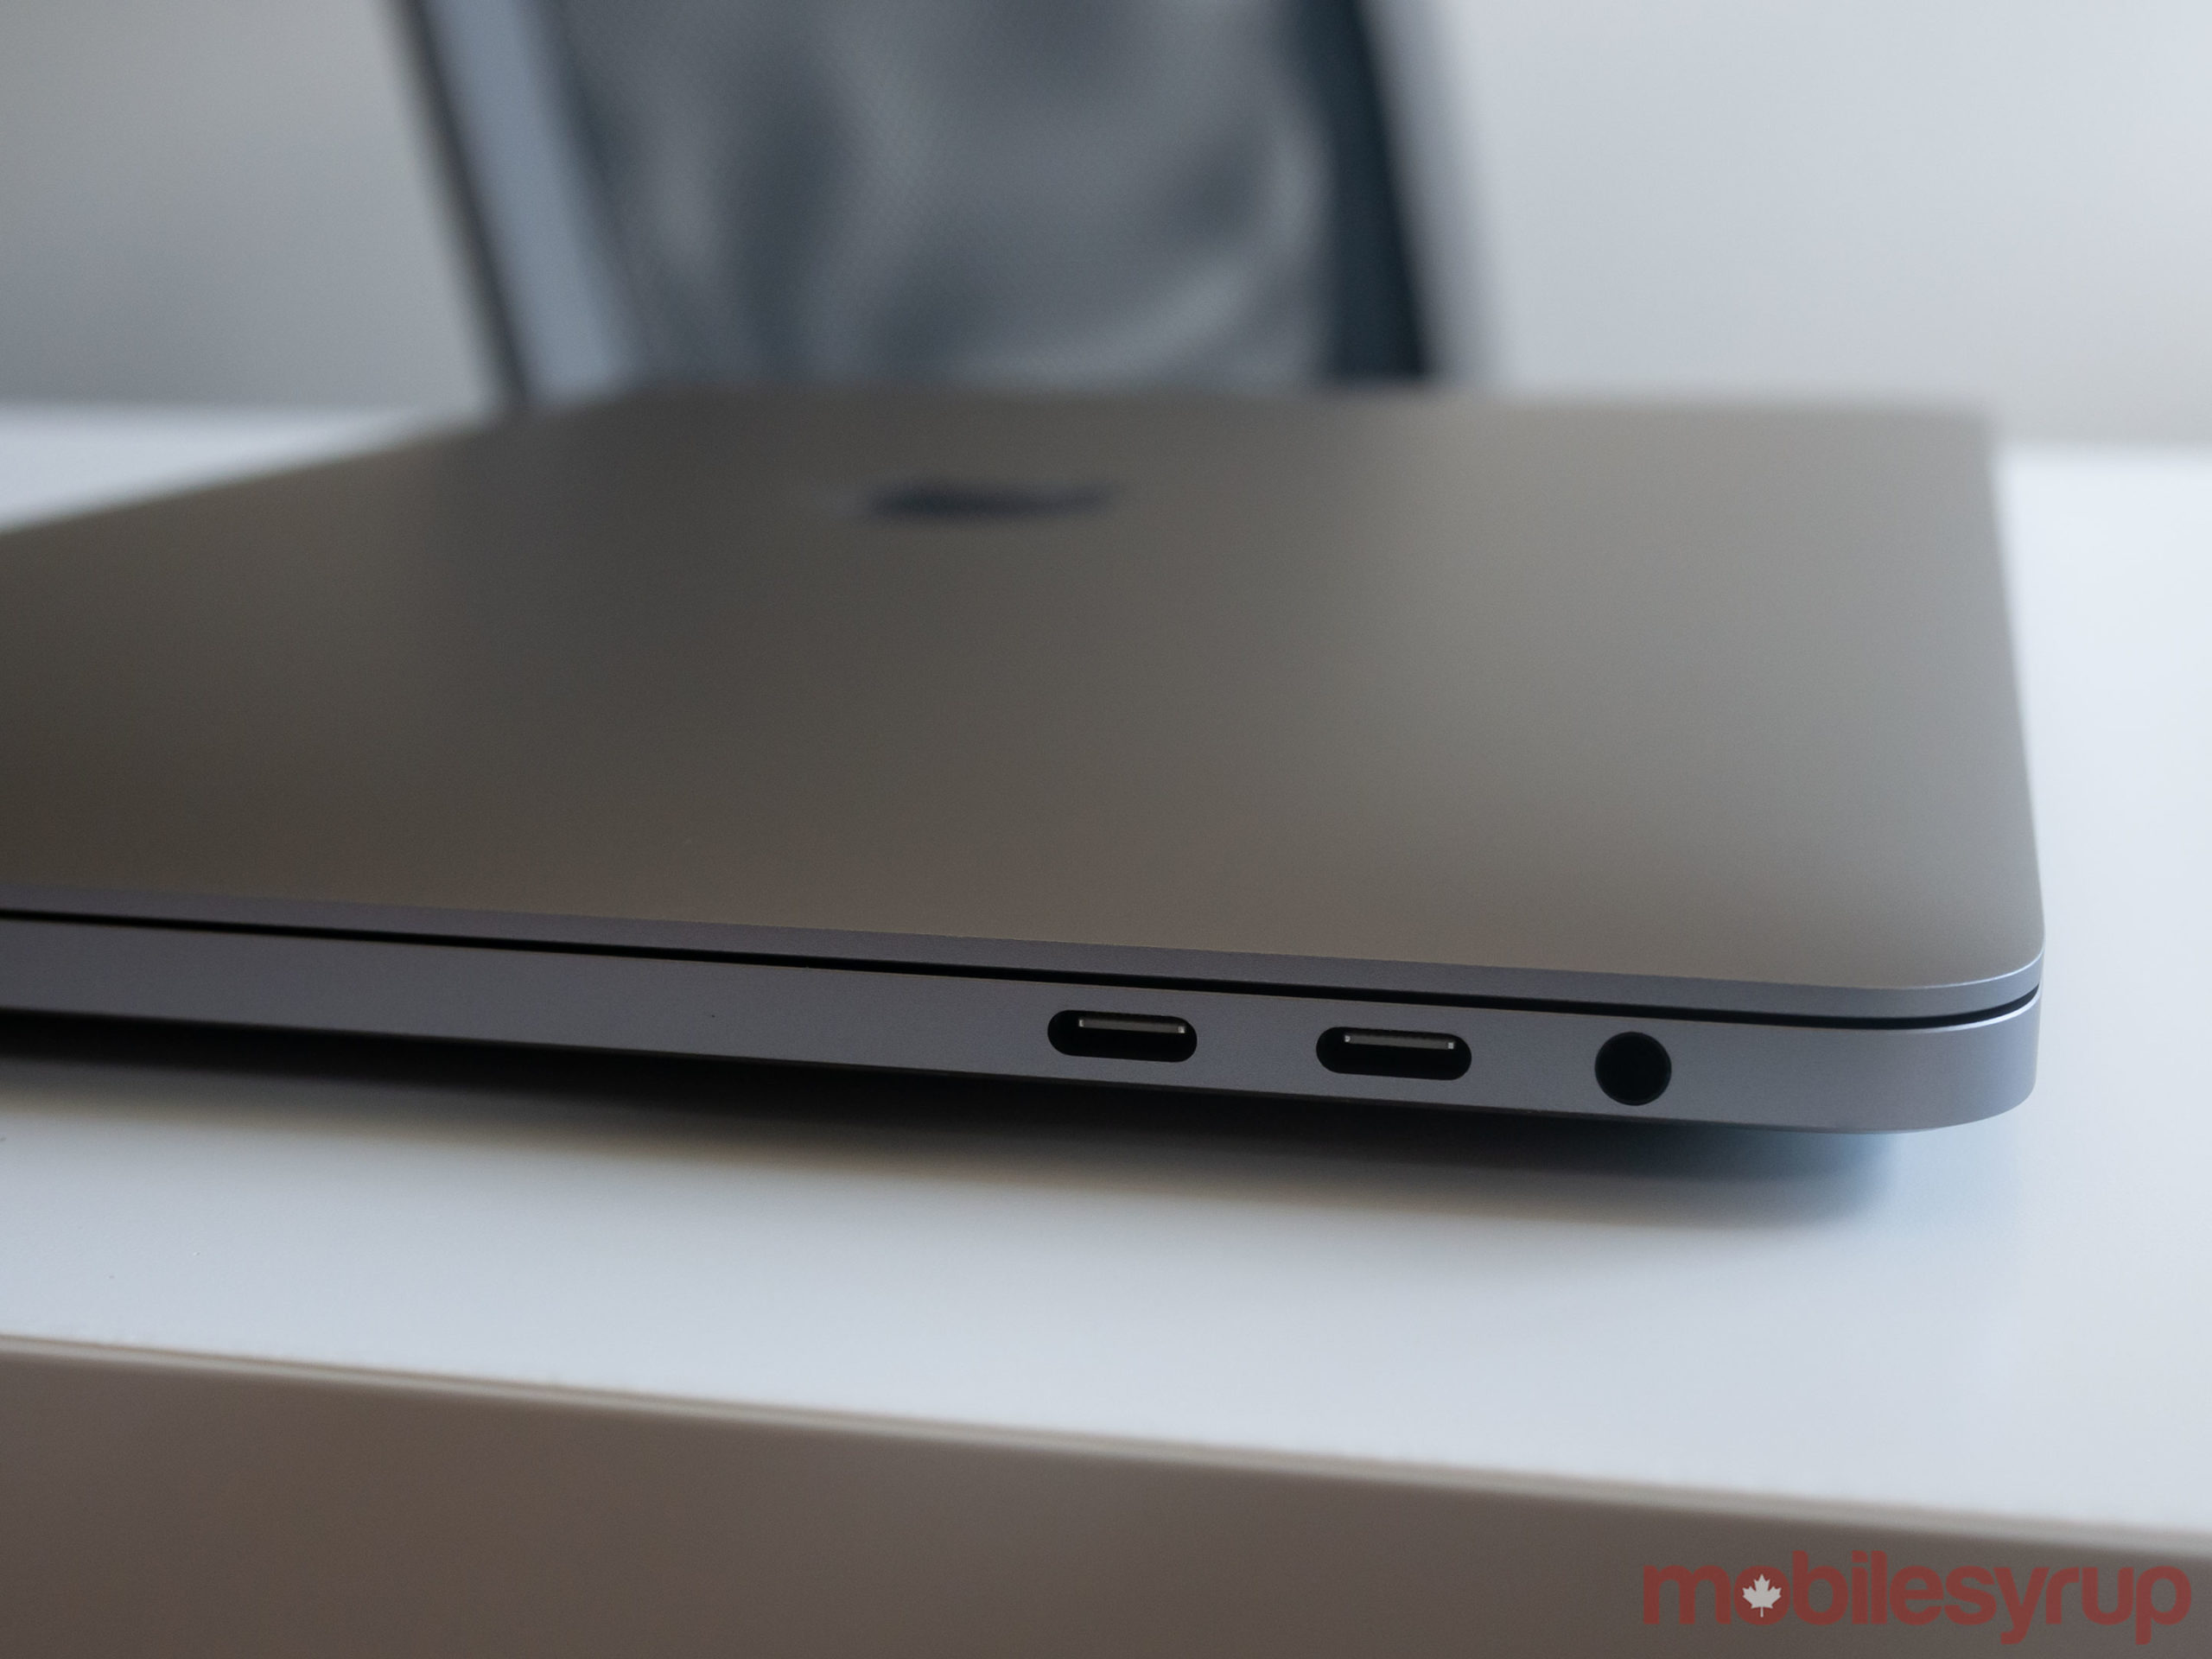 MacBook Pro 2020 USB-C ports